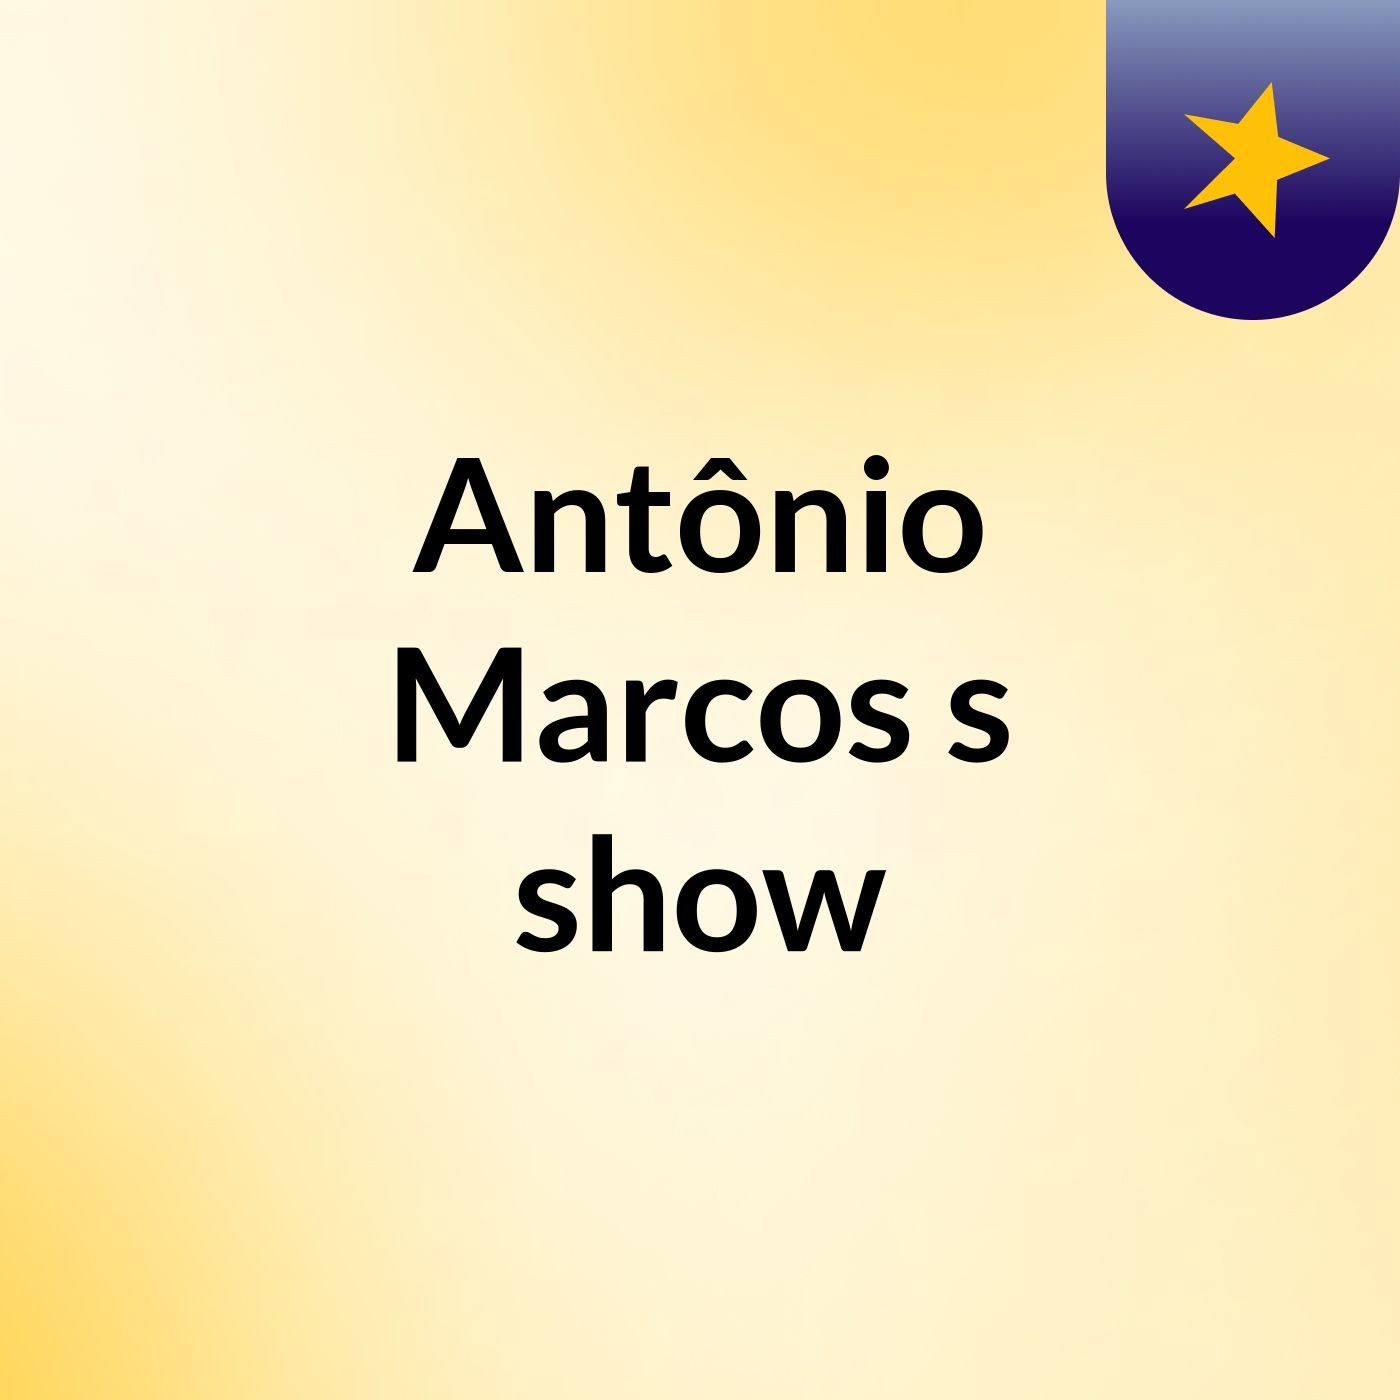 Antônio Marcos's show